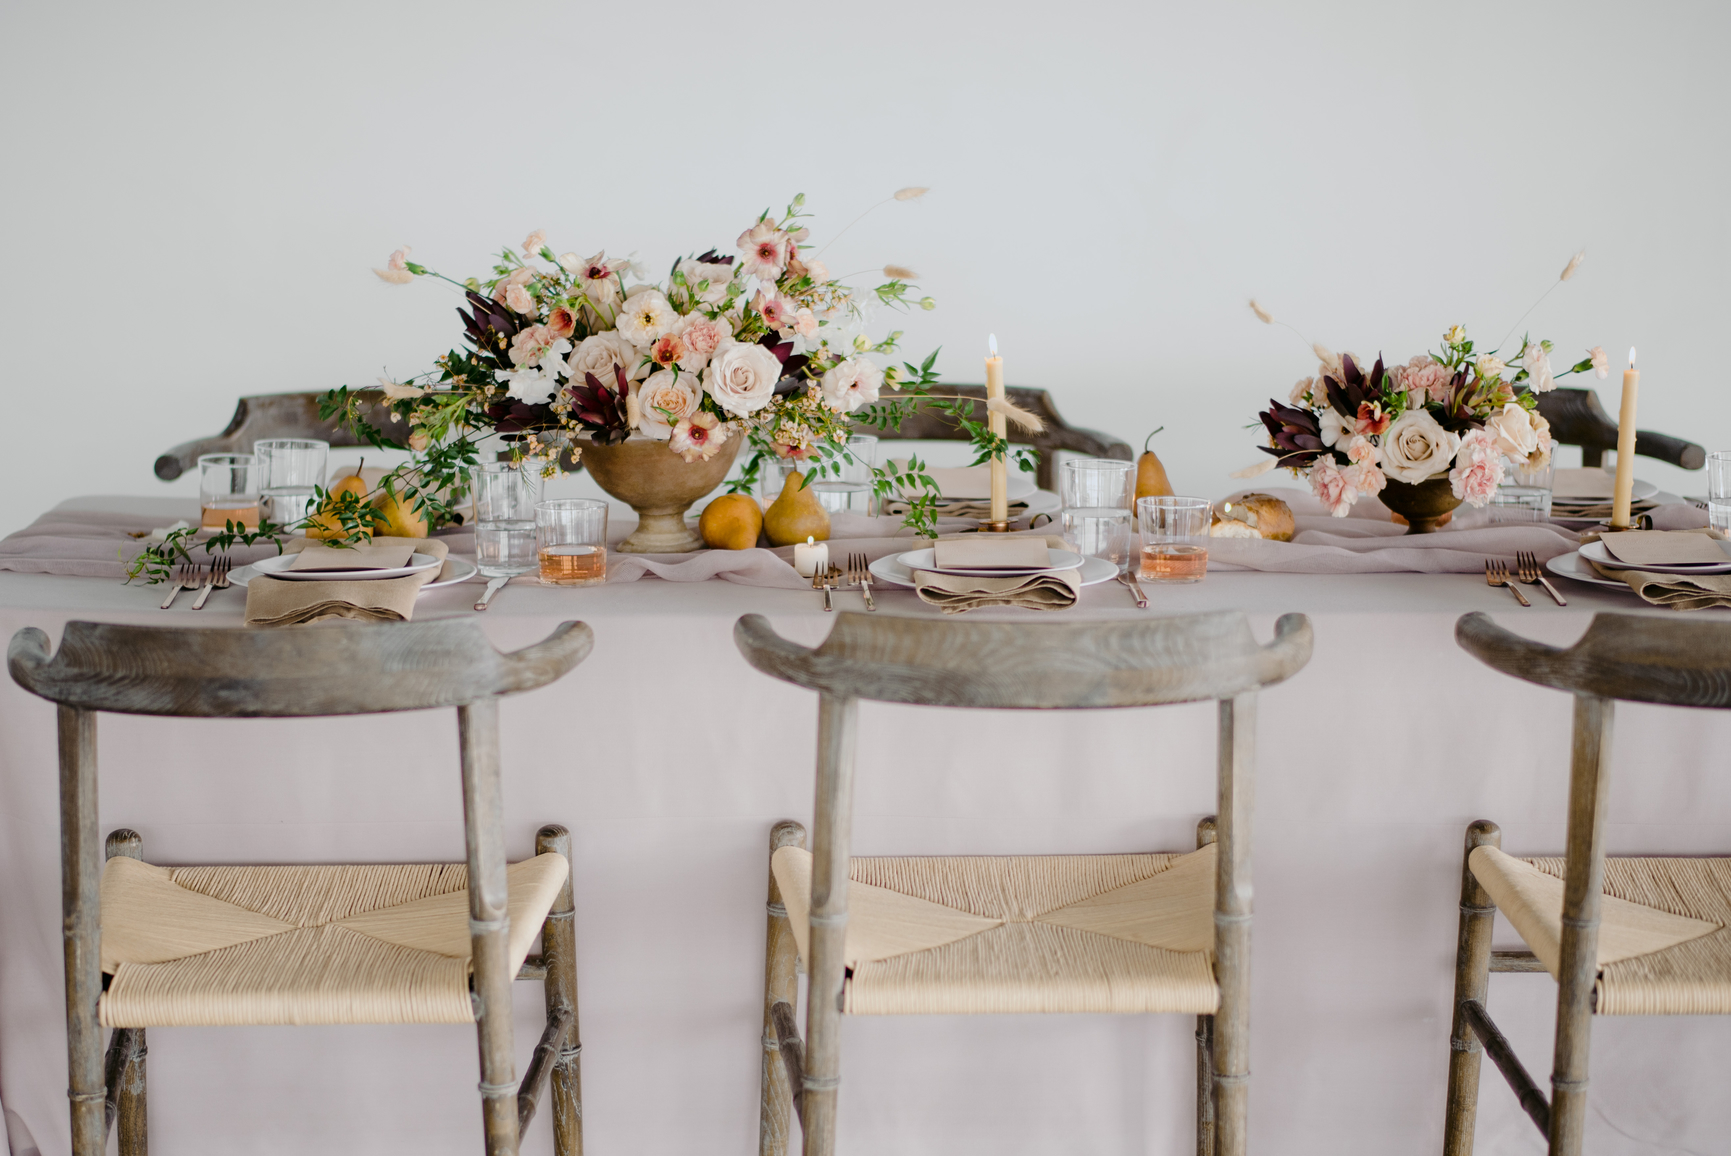 Dinner Party Table Set Up with Floral Arrangement by Casa de Suna